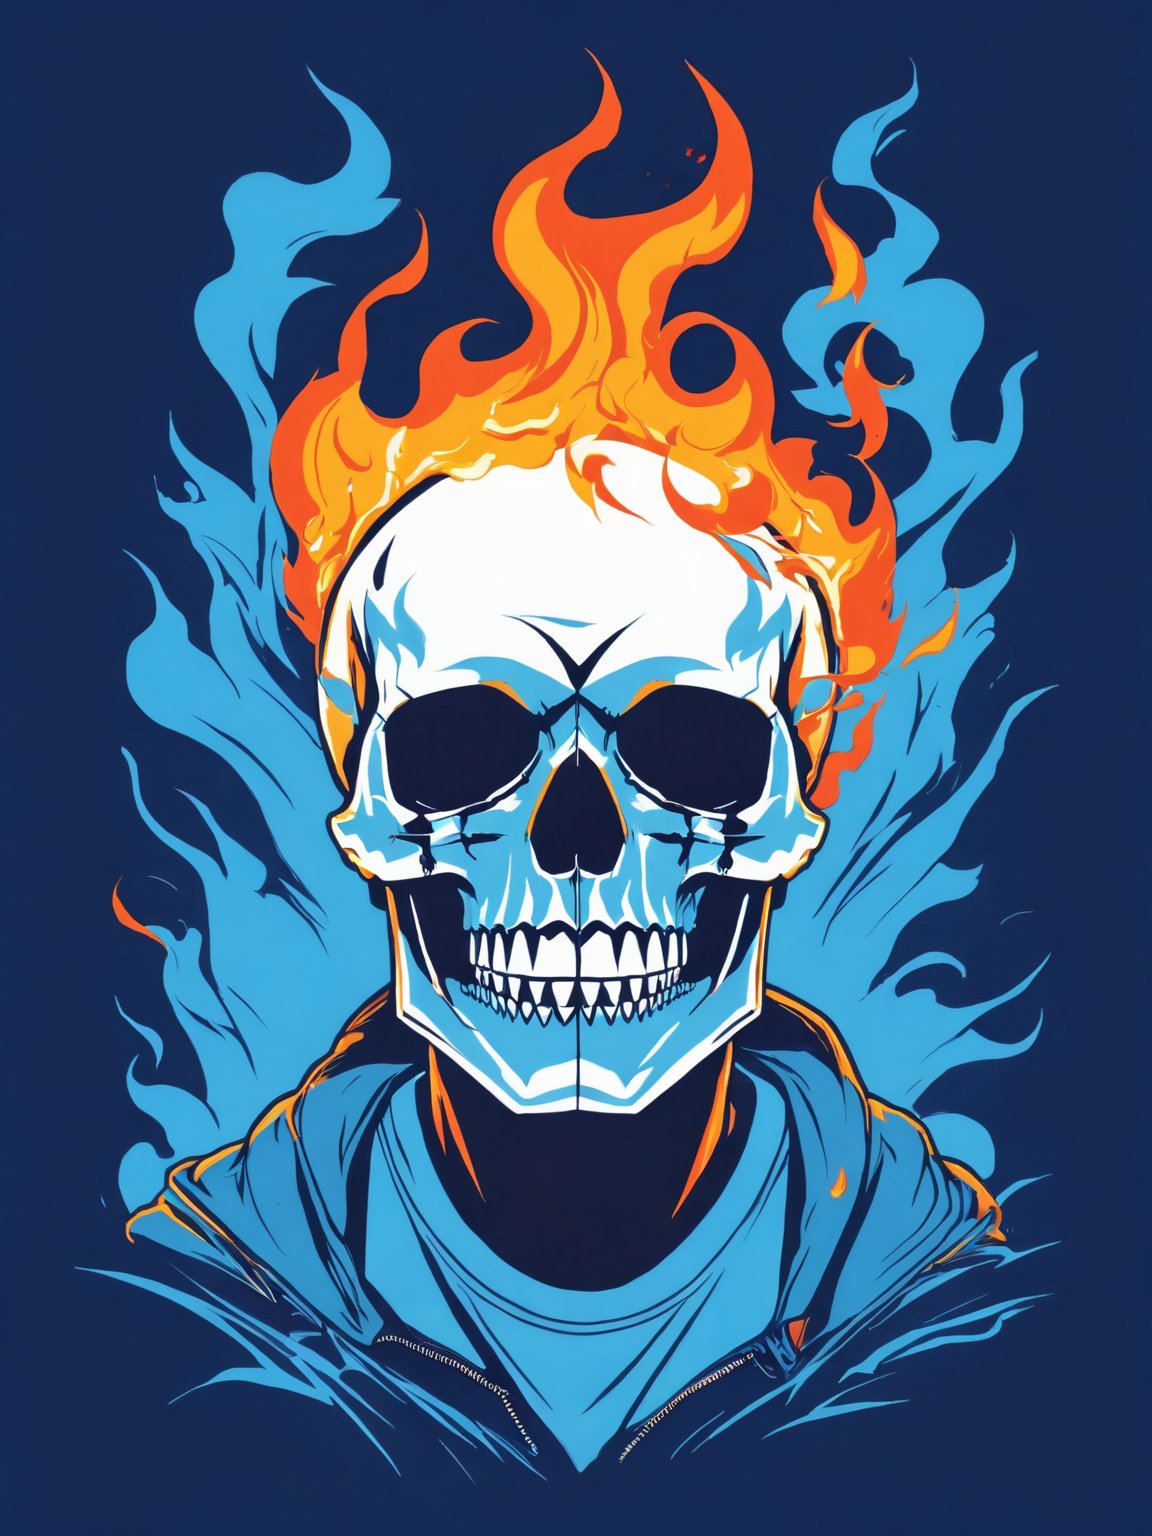 AiArtV,t-shirt design, simple background,1boy,male focus,teeth,blue background,fire,skull,burning